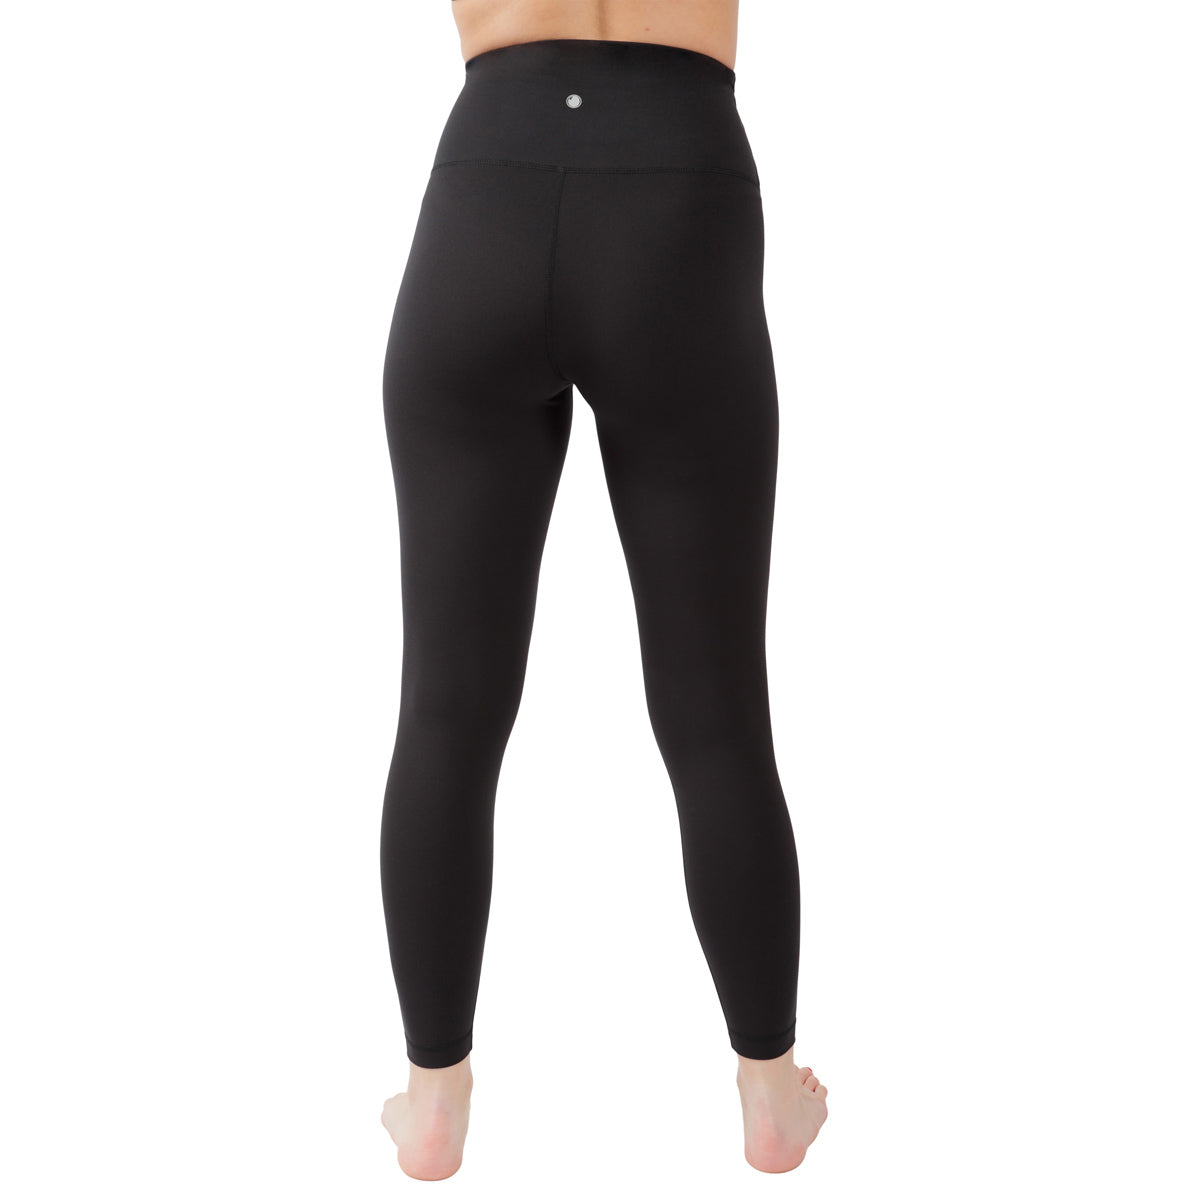 Yogalicious-Lux Elastic Free HR Basic Capri-S  Black floral leggings,  Cut leggings, Colorful leggings